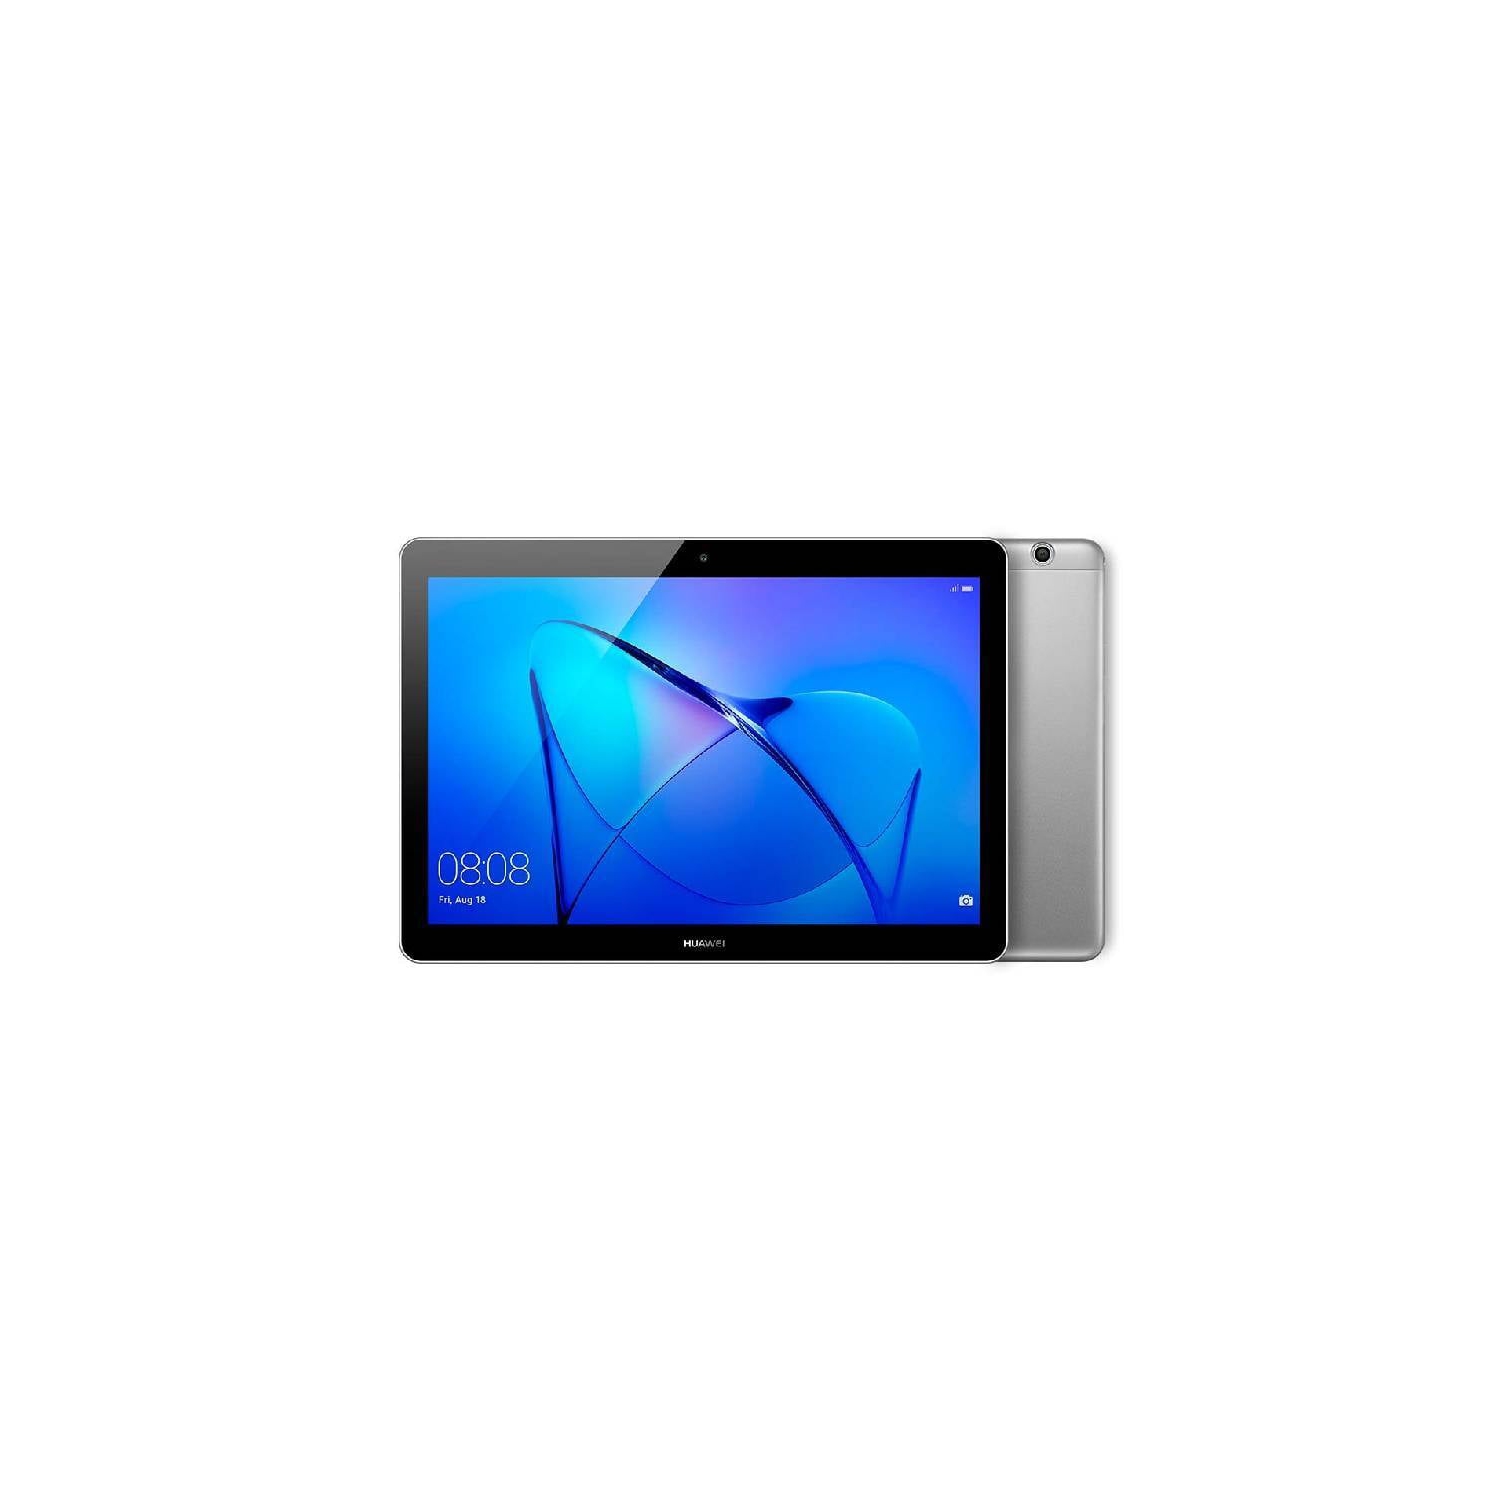 Huawei 10" MediaPad T3 10 16GB Tablet (AGS-L03) - Space Gray